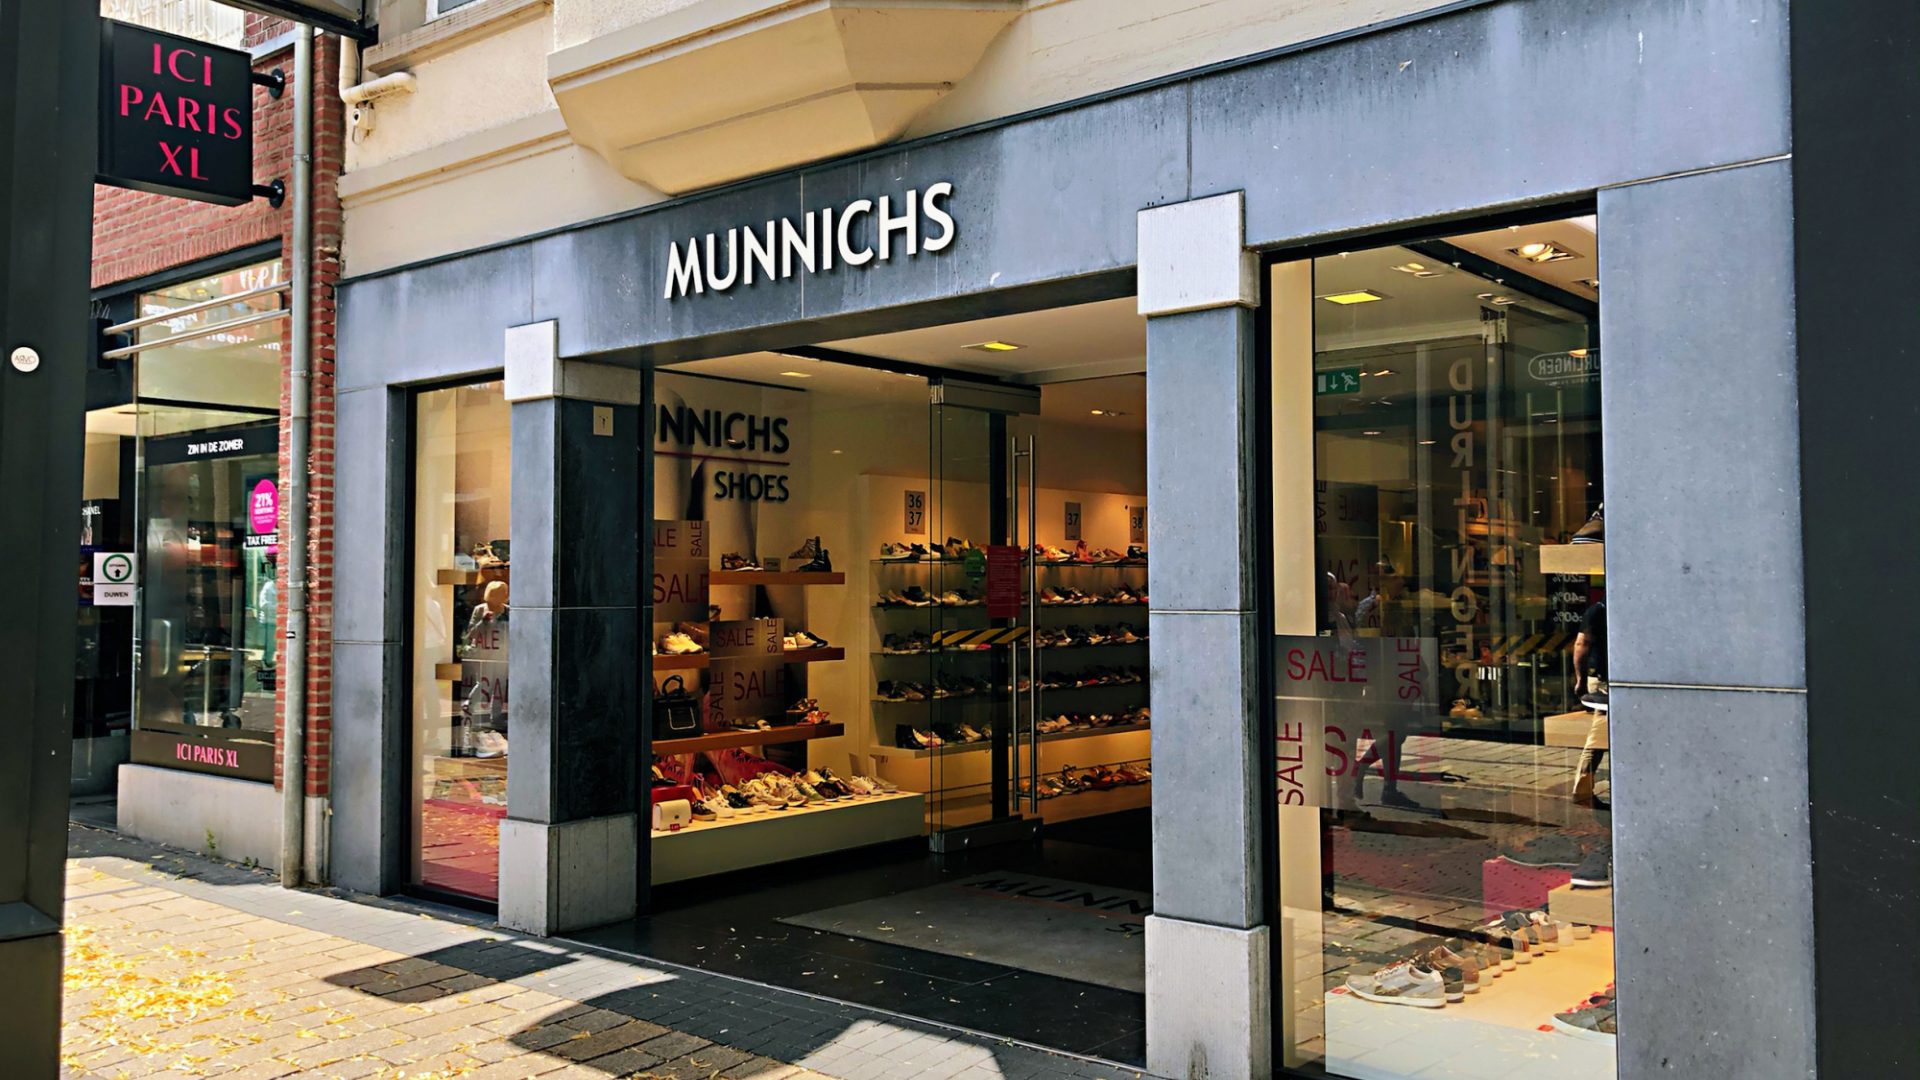 Munnichs Shoes